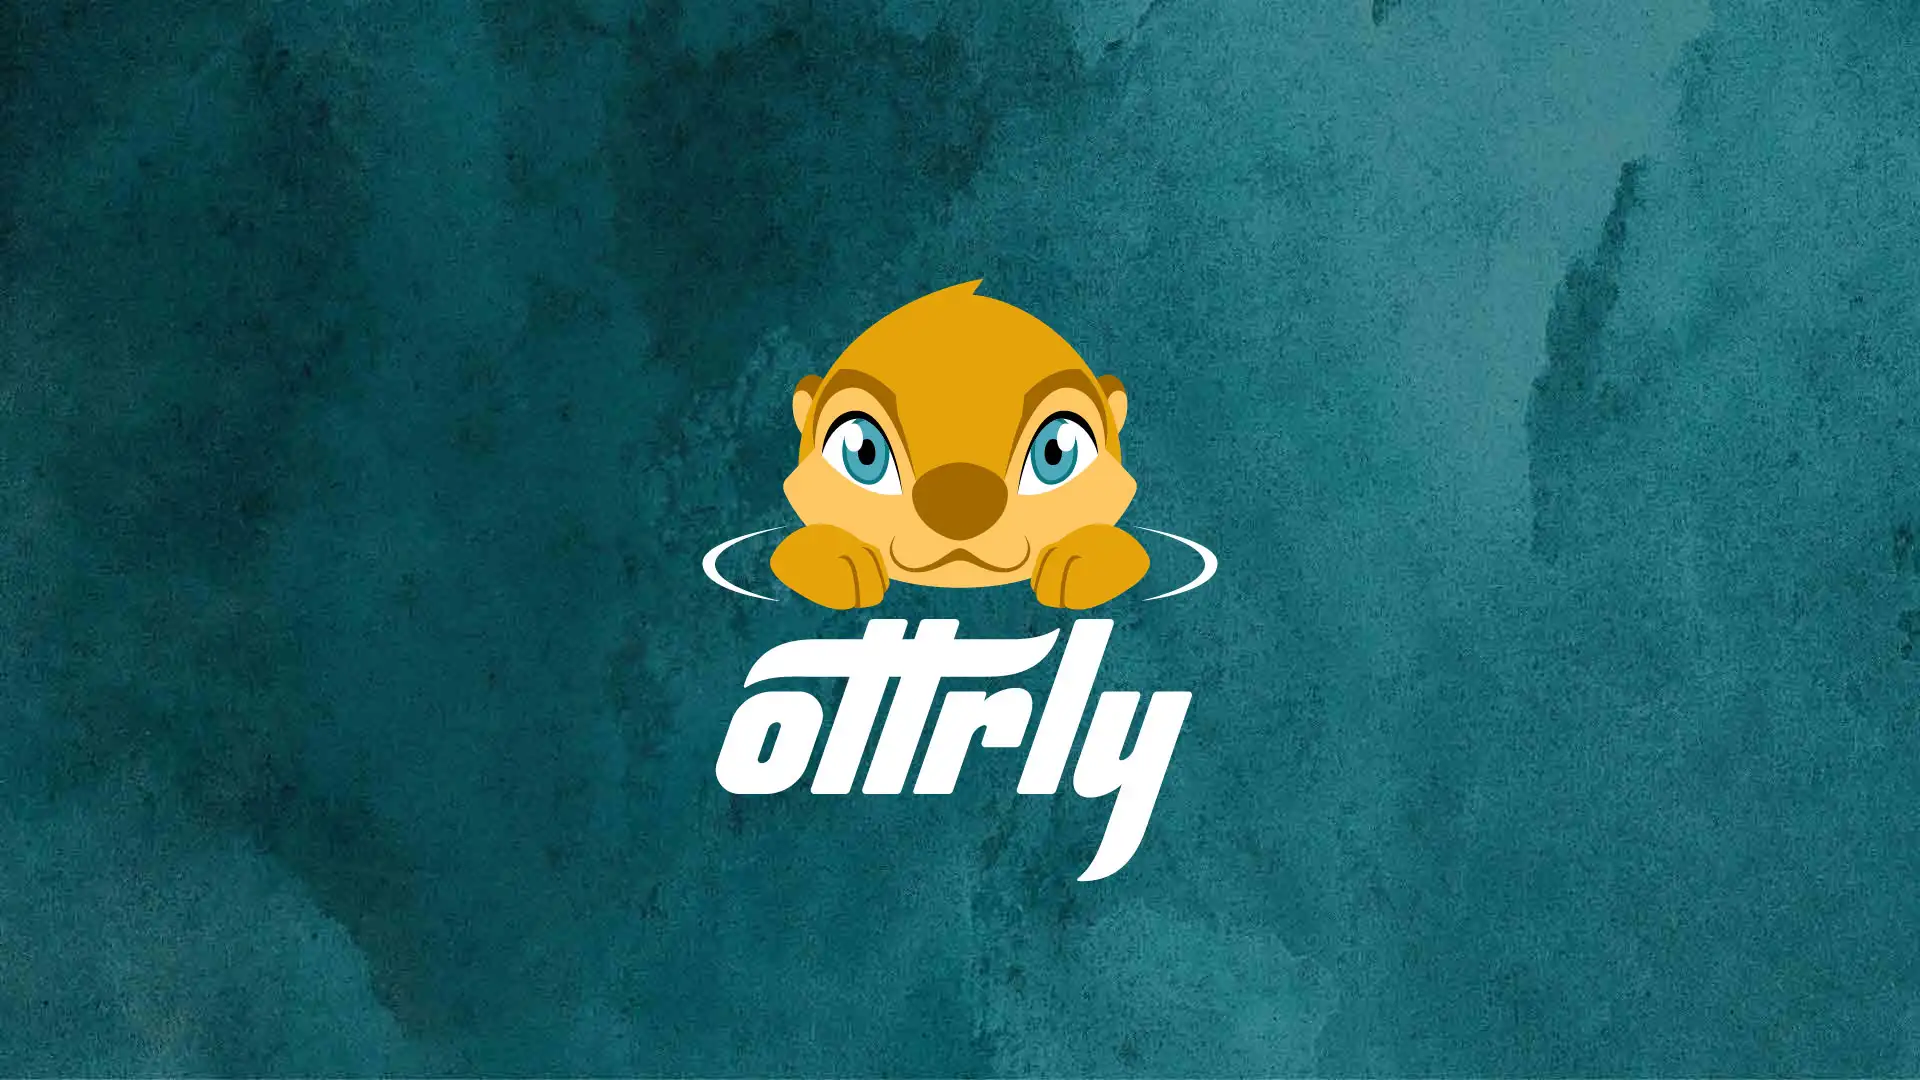 Ottrly logo branding design by Dusty Drake